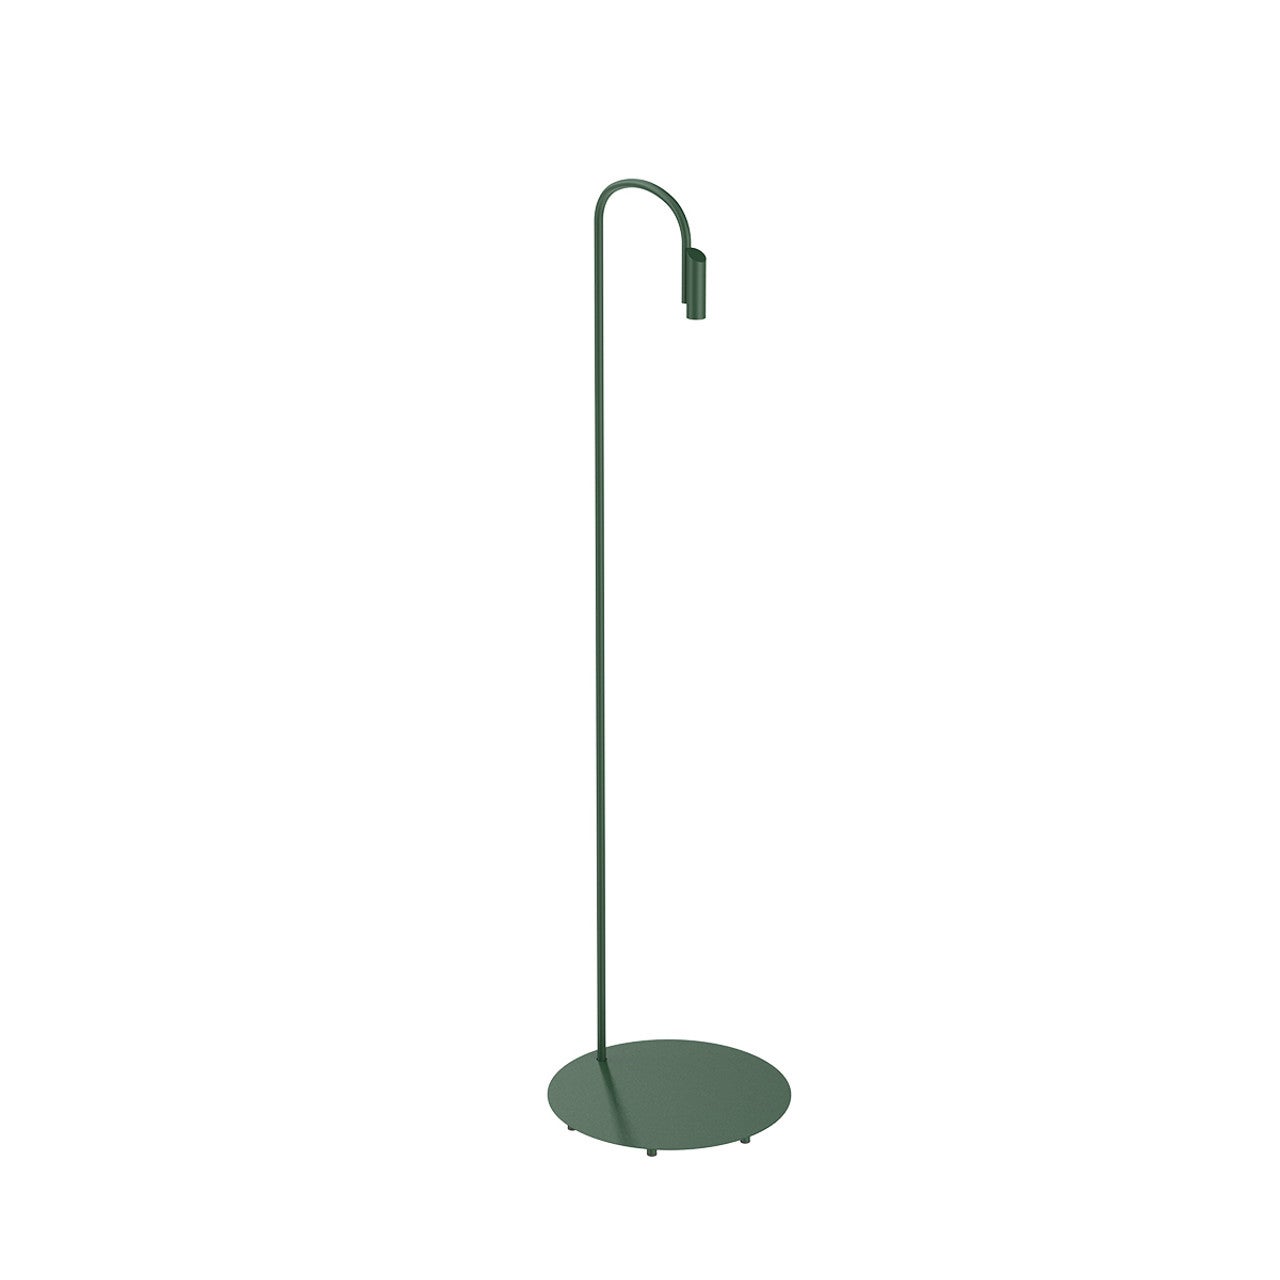 Flos Caule 2700K Model 4 Outdoor Floor Lamp in Forest Green with Regular Shade